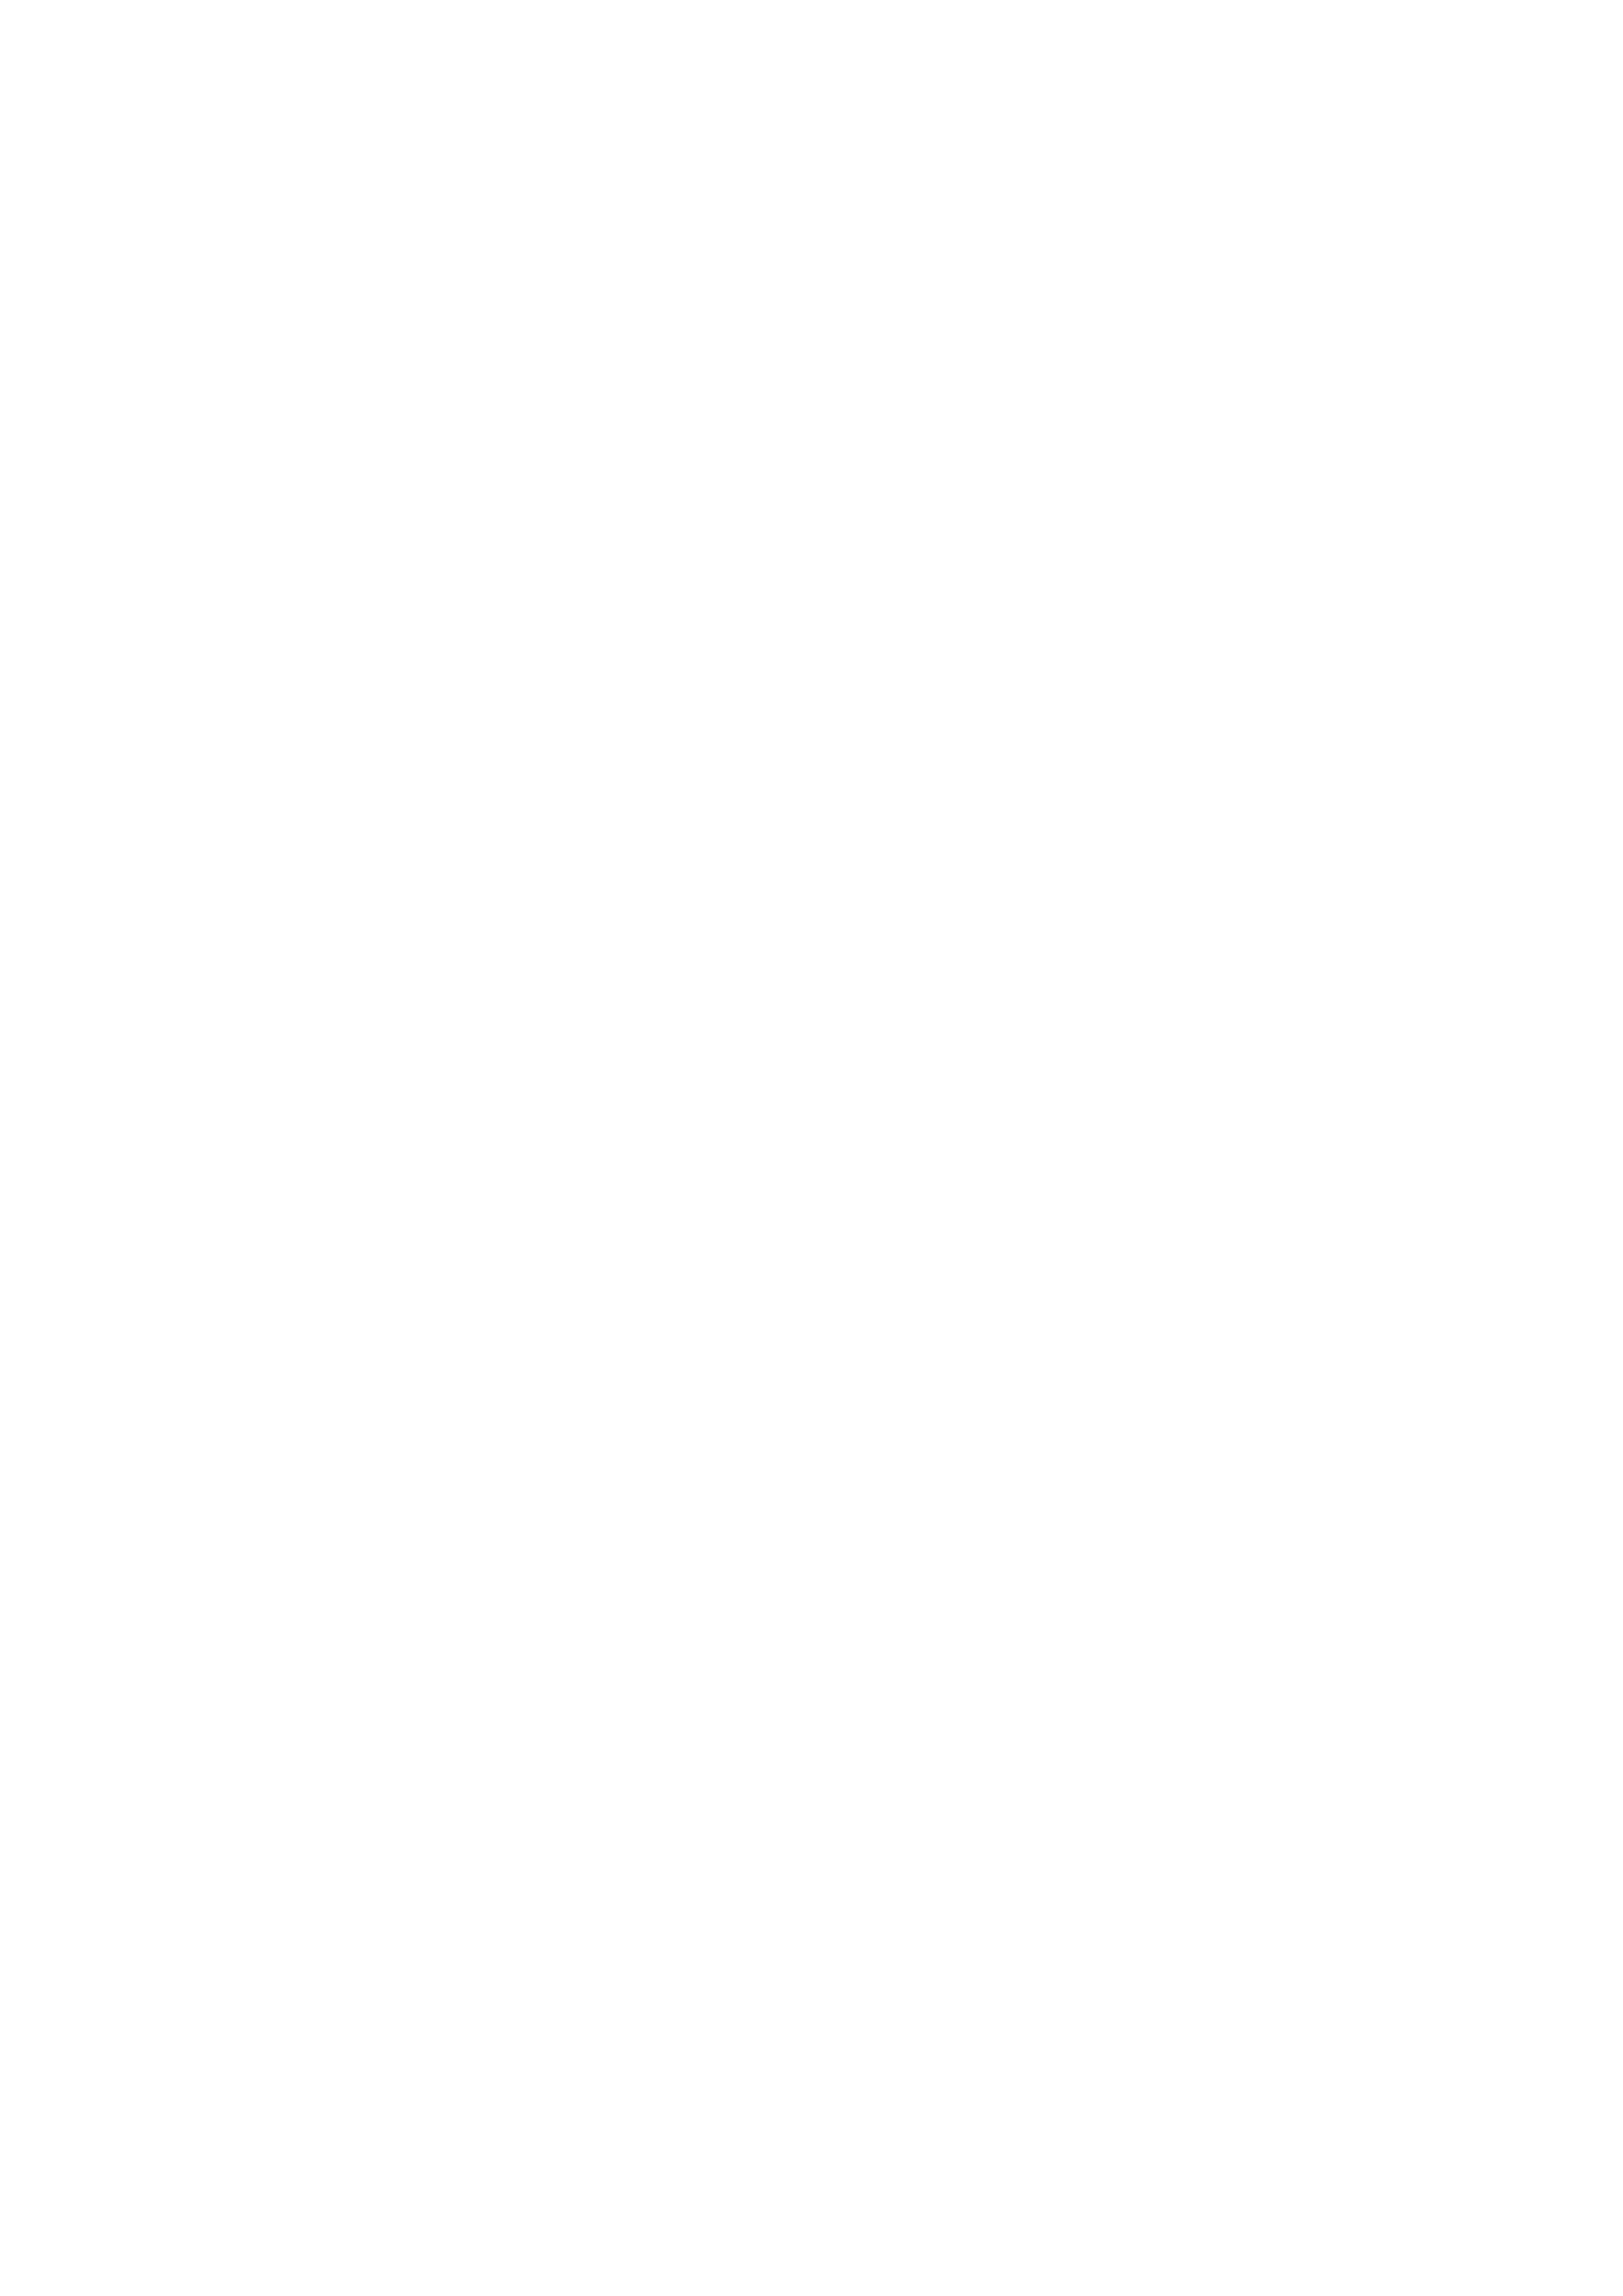 MuatetemaPhoto